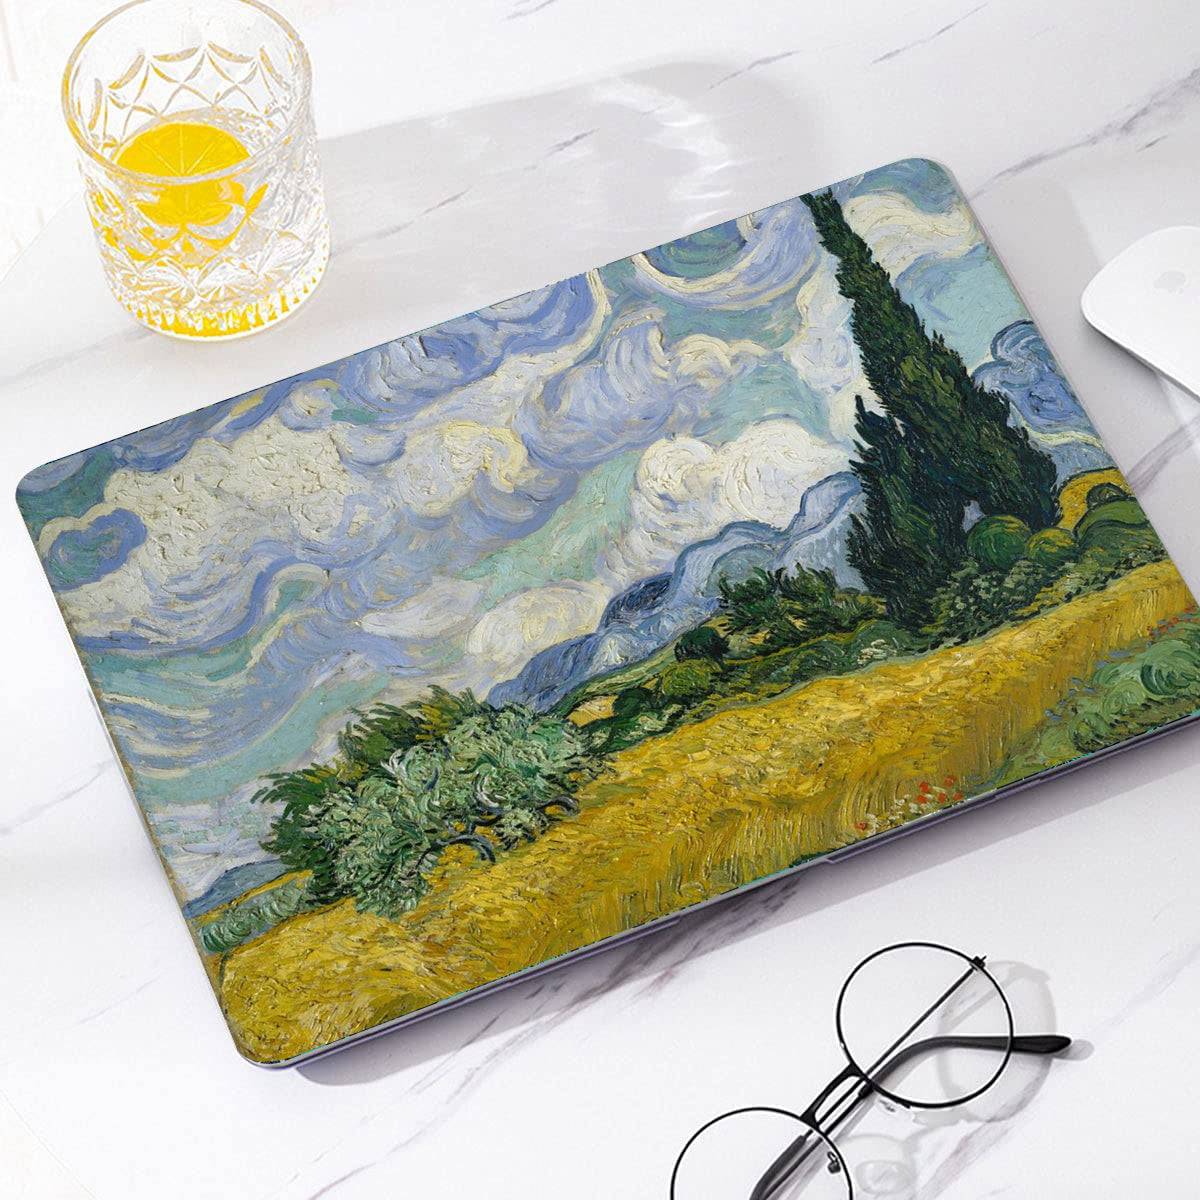 Van Gogh Works ''Wheat Field and Cypress'' Macbook case Logo shines through - BELKCASE